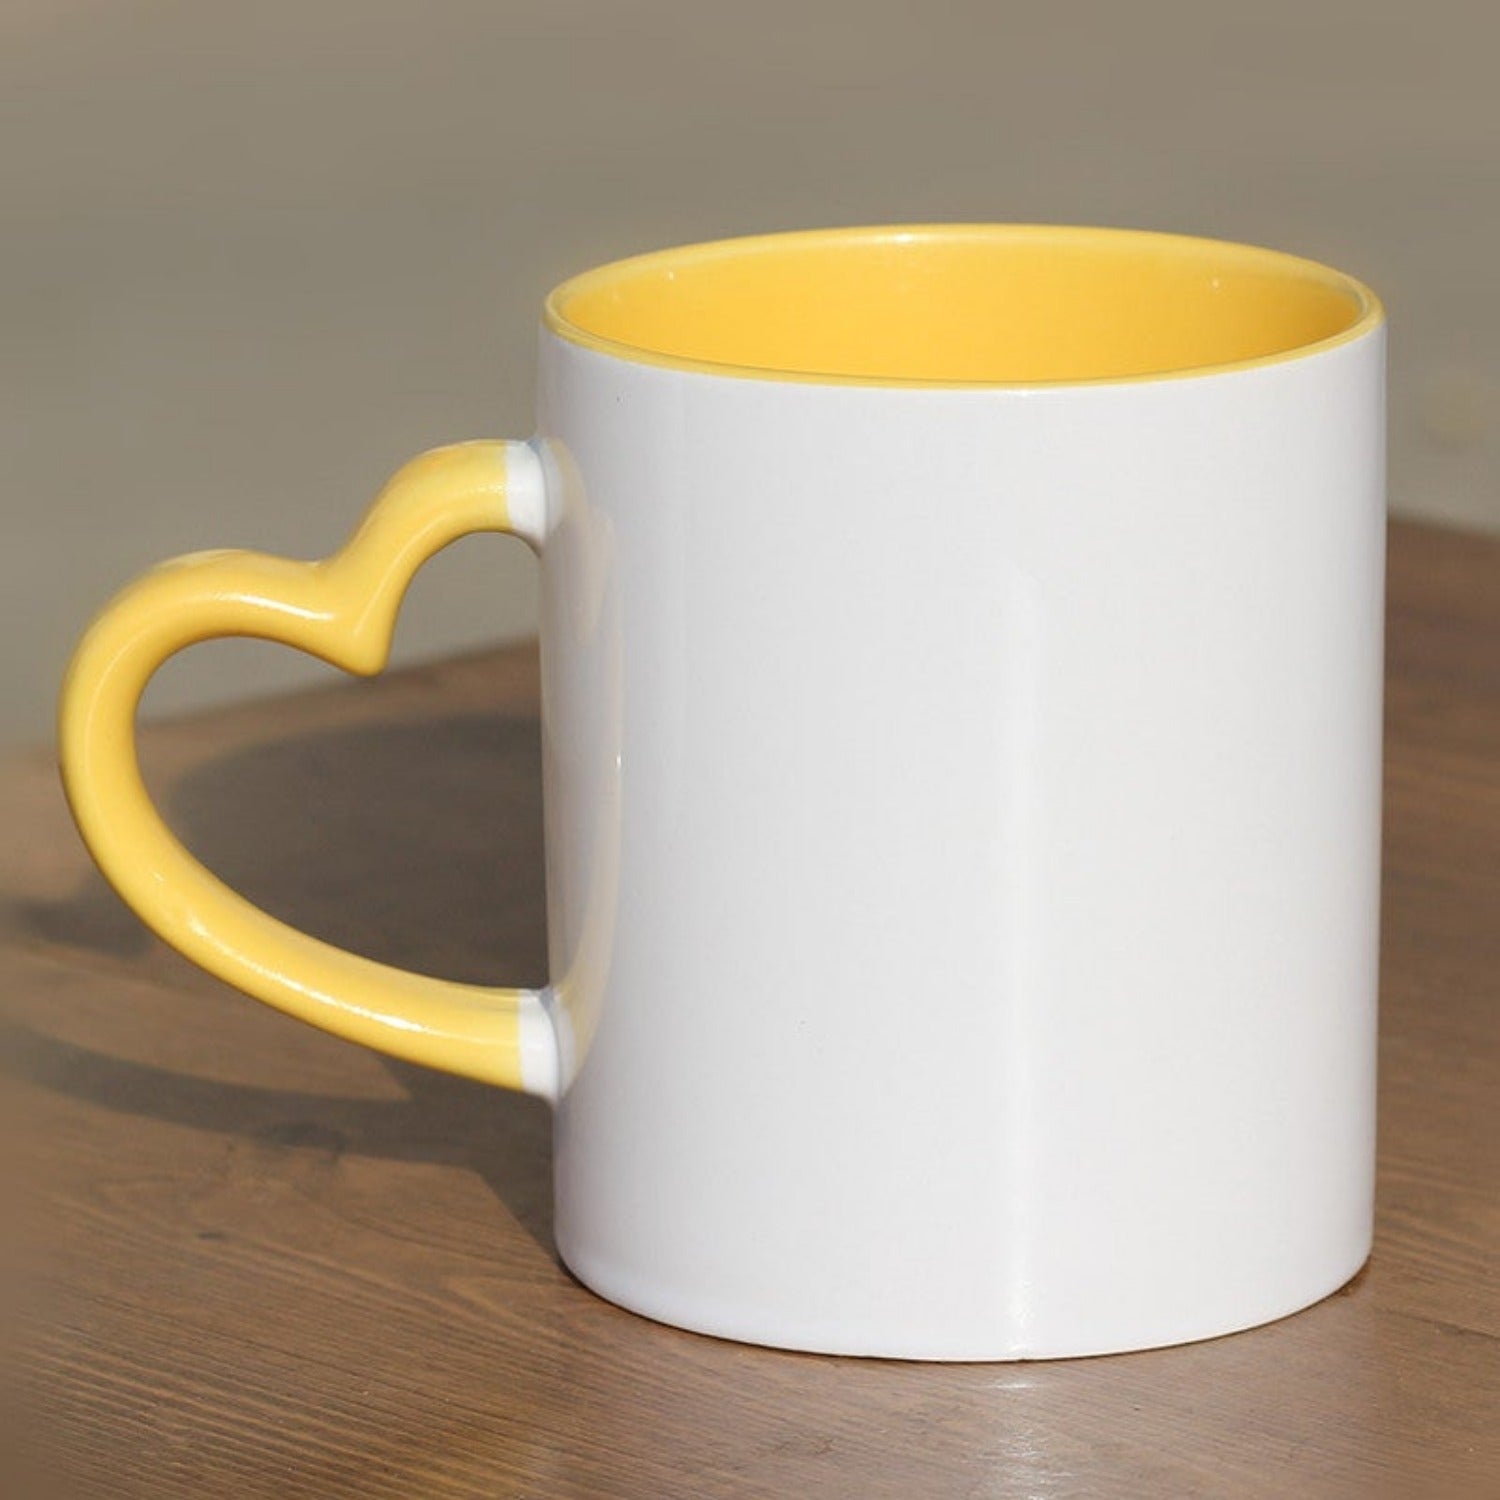 Personalized Mugs: Custom Printed Photo Mugs